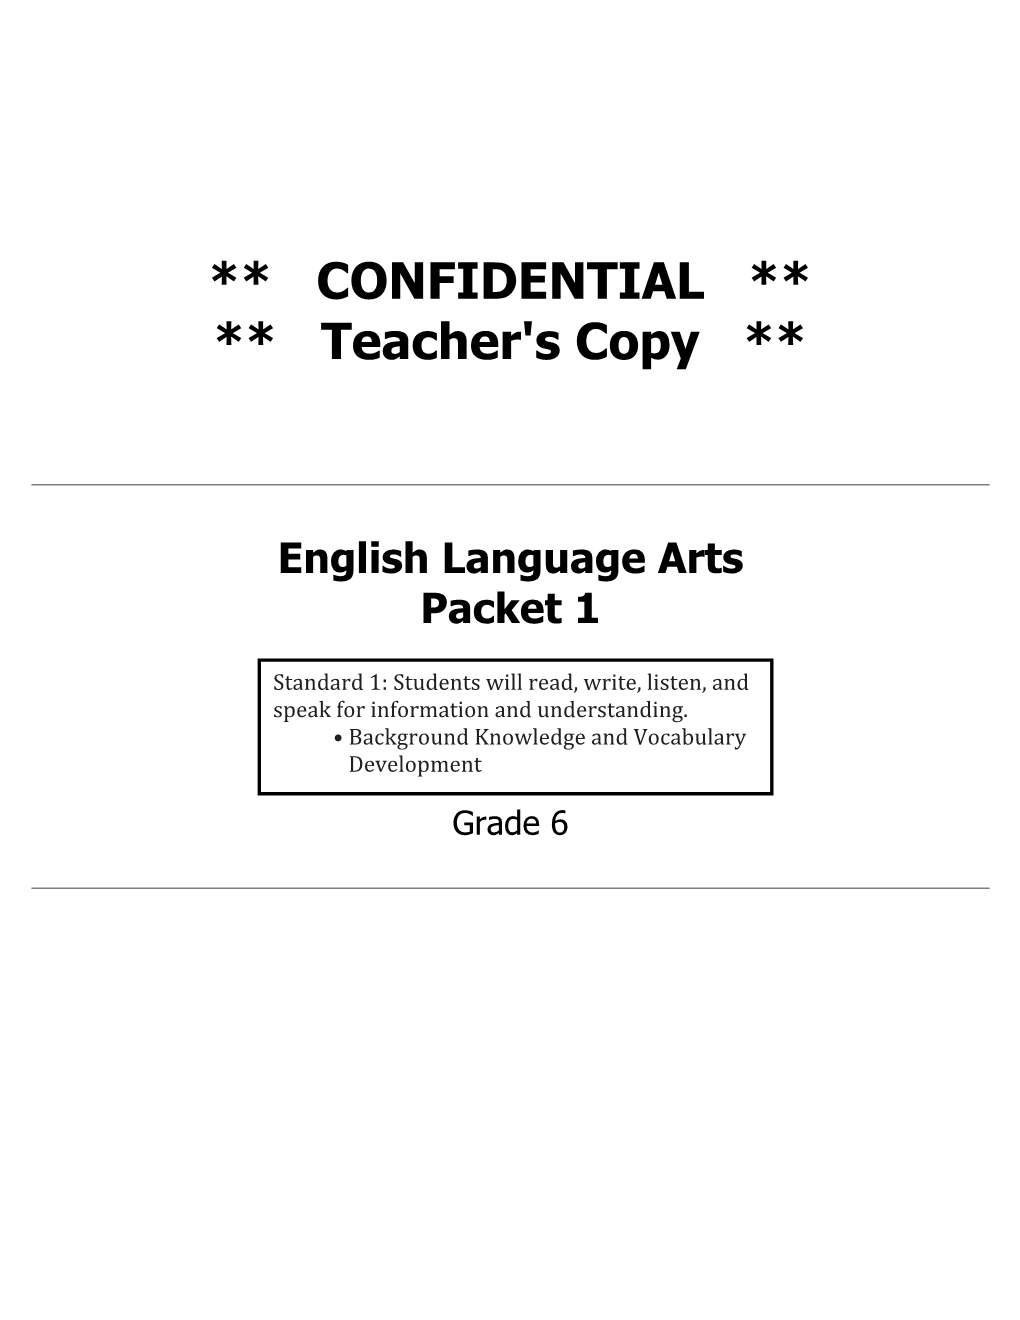 CONFIDENTIAL ** ** Teacher's Copy